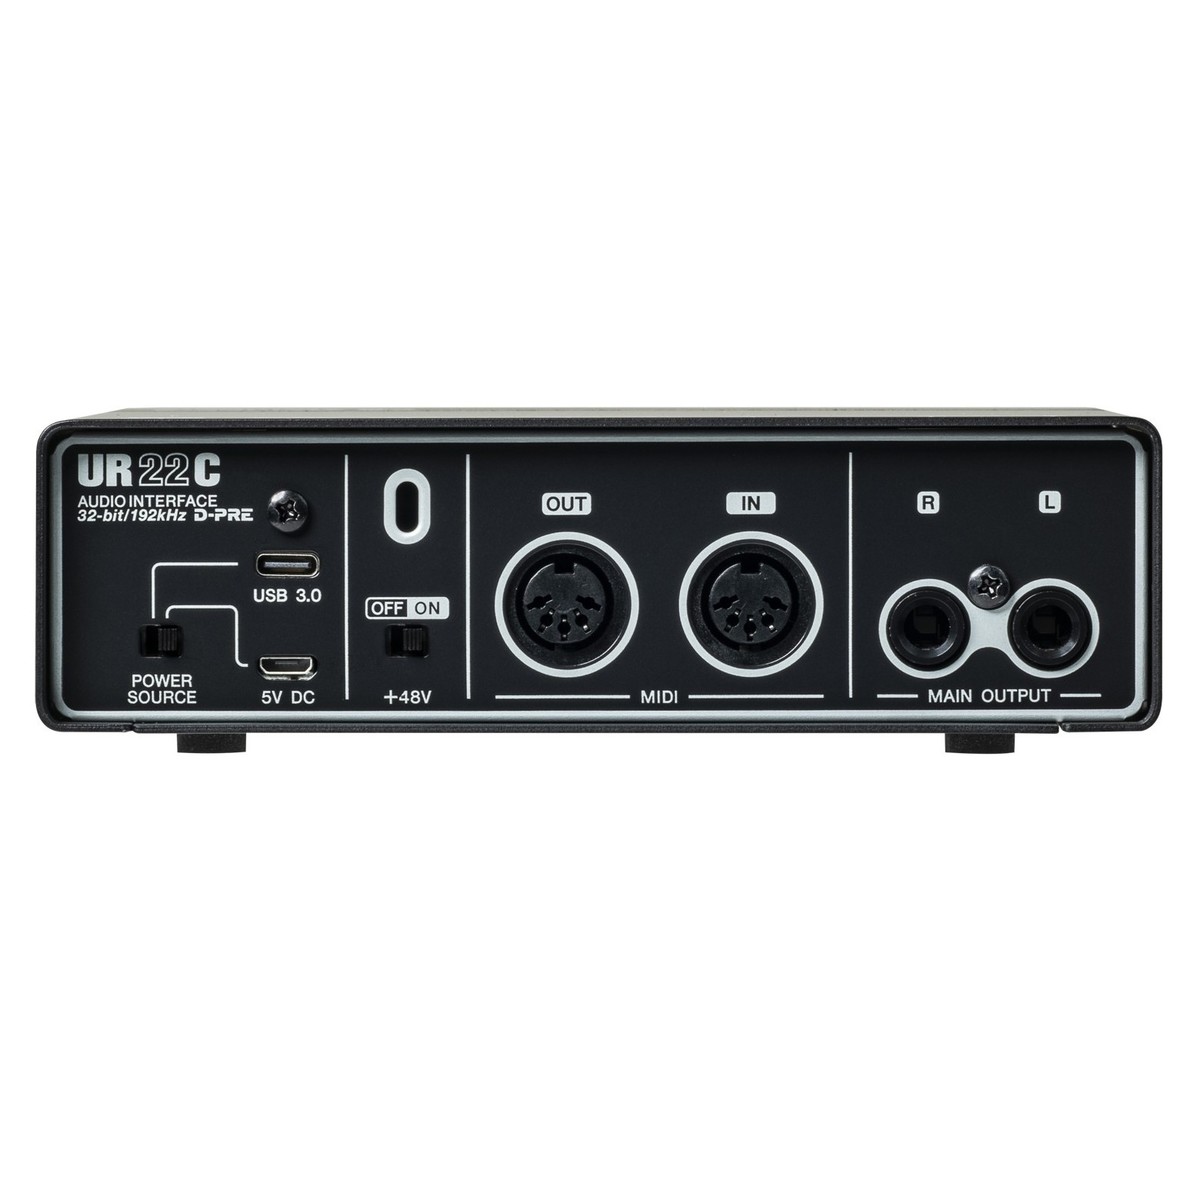 STEINBERG UR22C INTERFACCIA AUDIO USB 3.0 MIDI 2 CANALI CON D-PRE 24BIT 192Khz 3